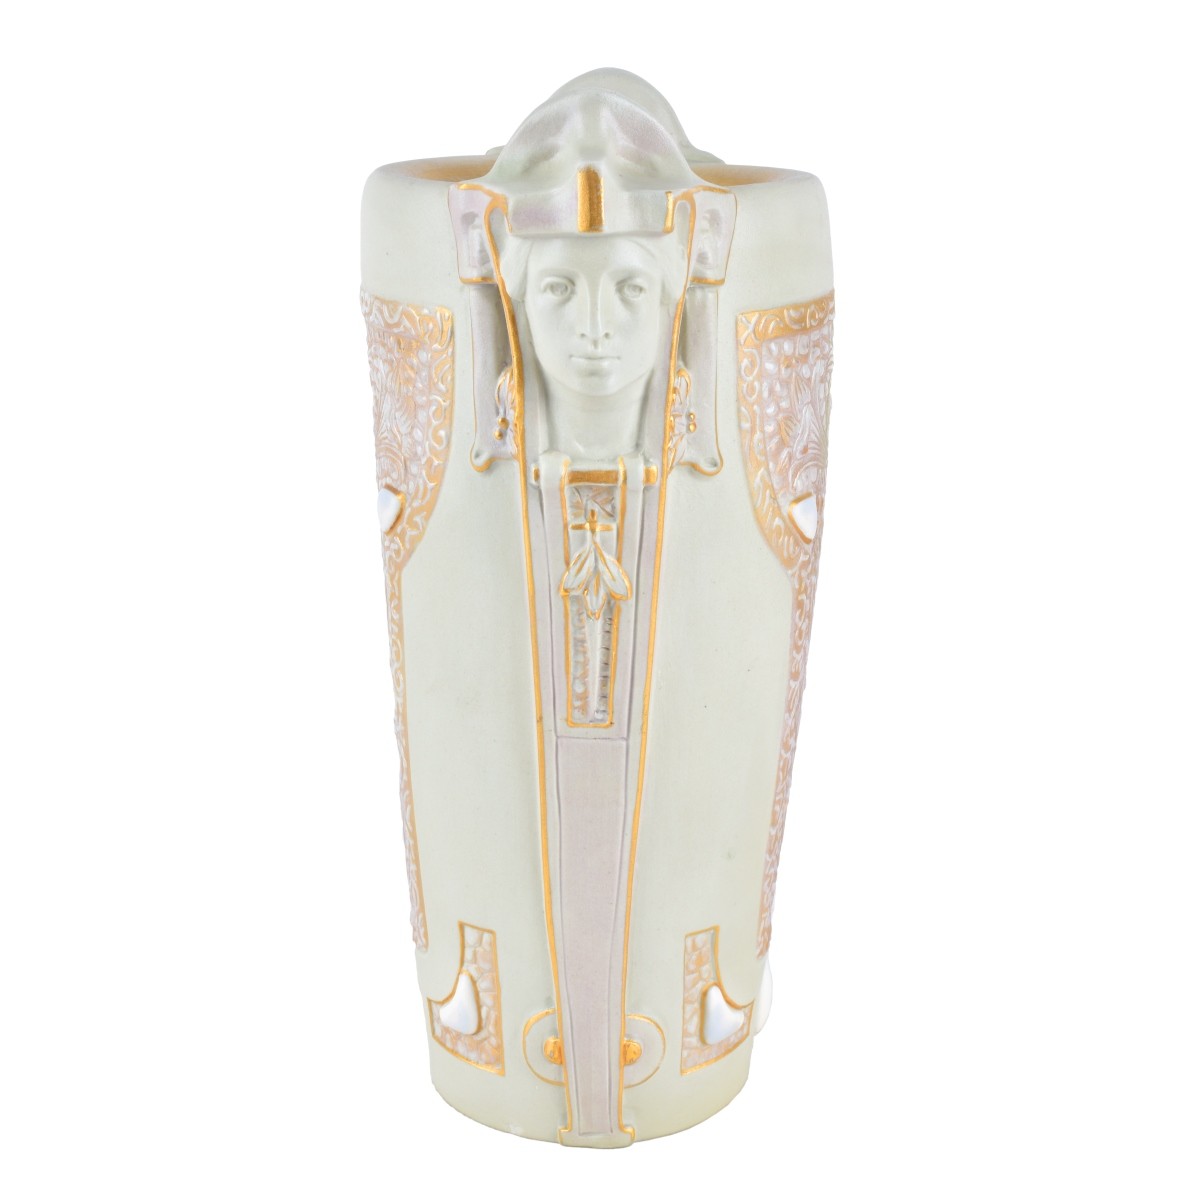 Ernst Wahliss Art Nouveau Ceramic Figural Vase